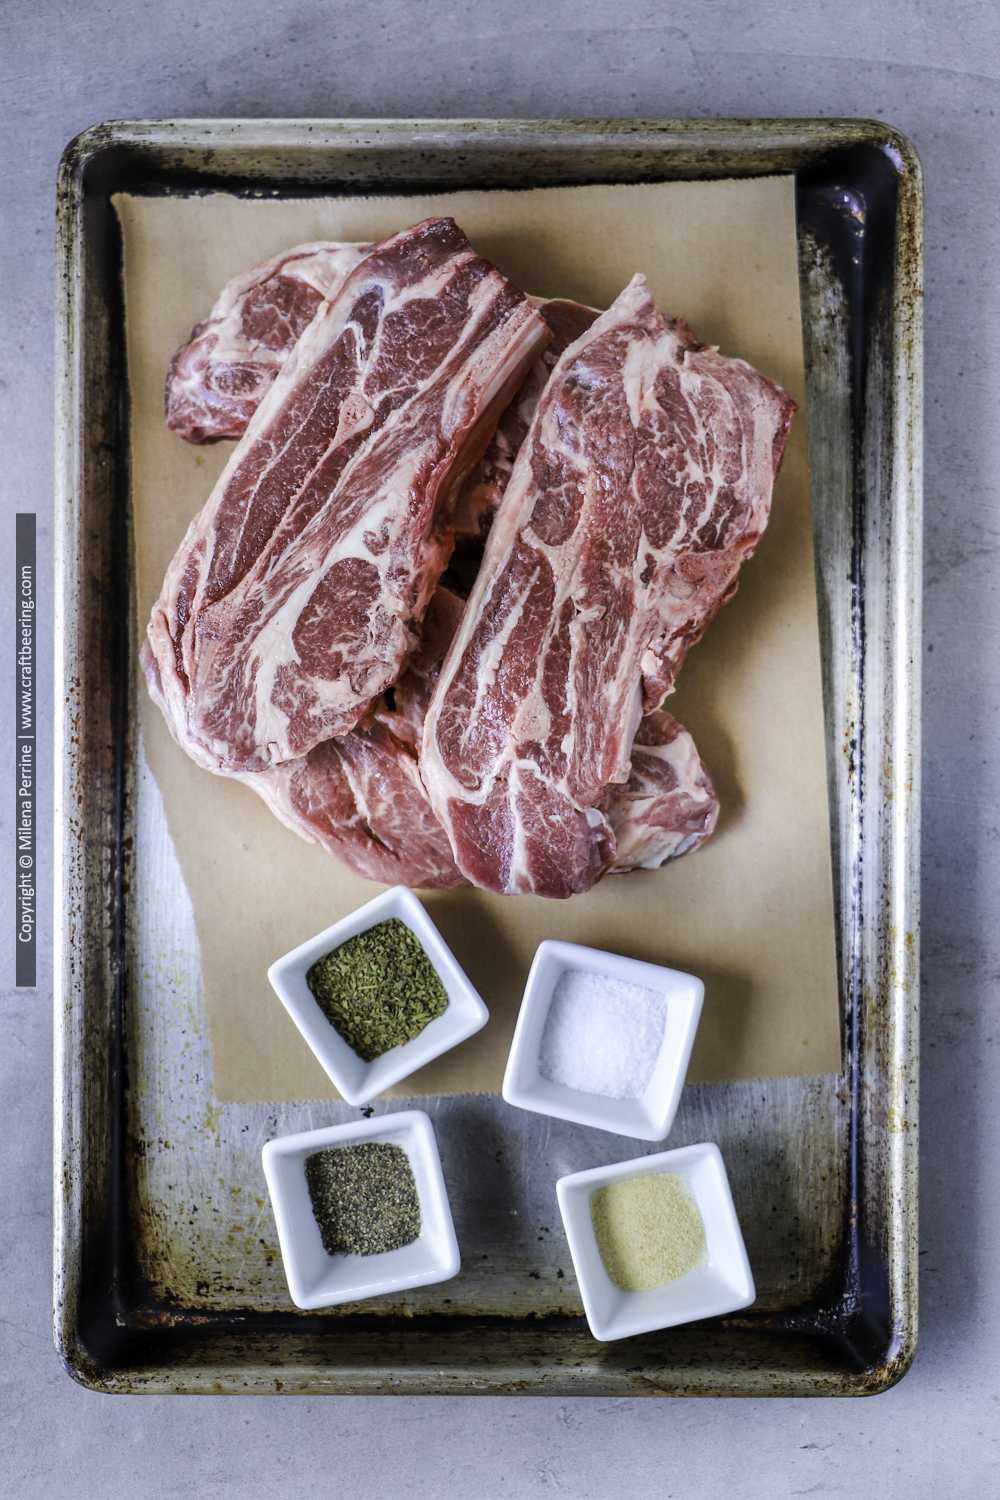 Raw lamb chops with seasoning, ready for smoking.